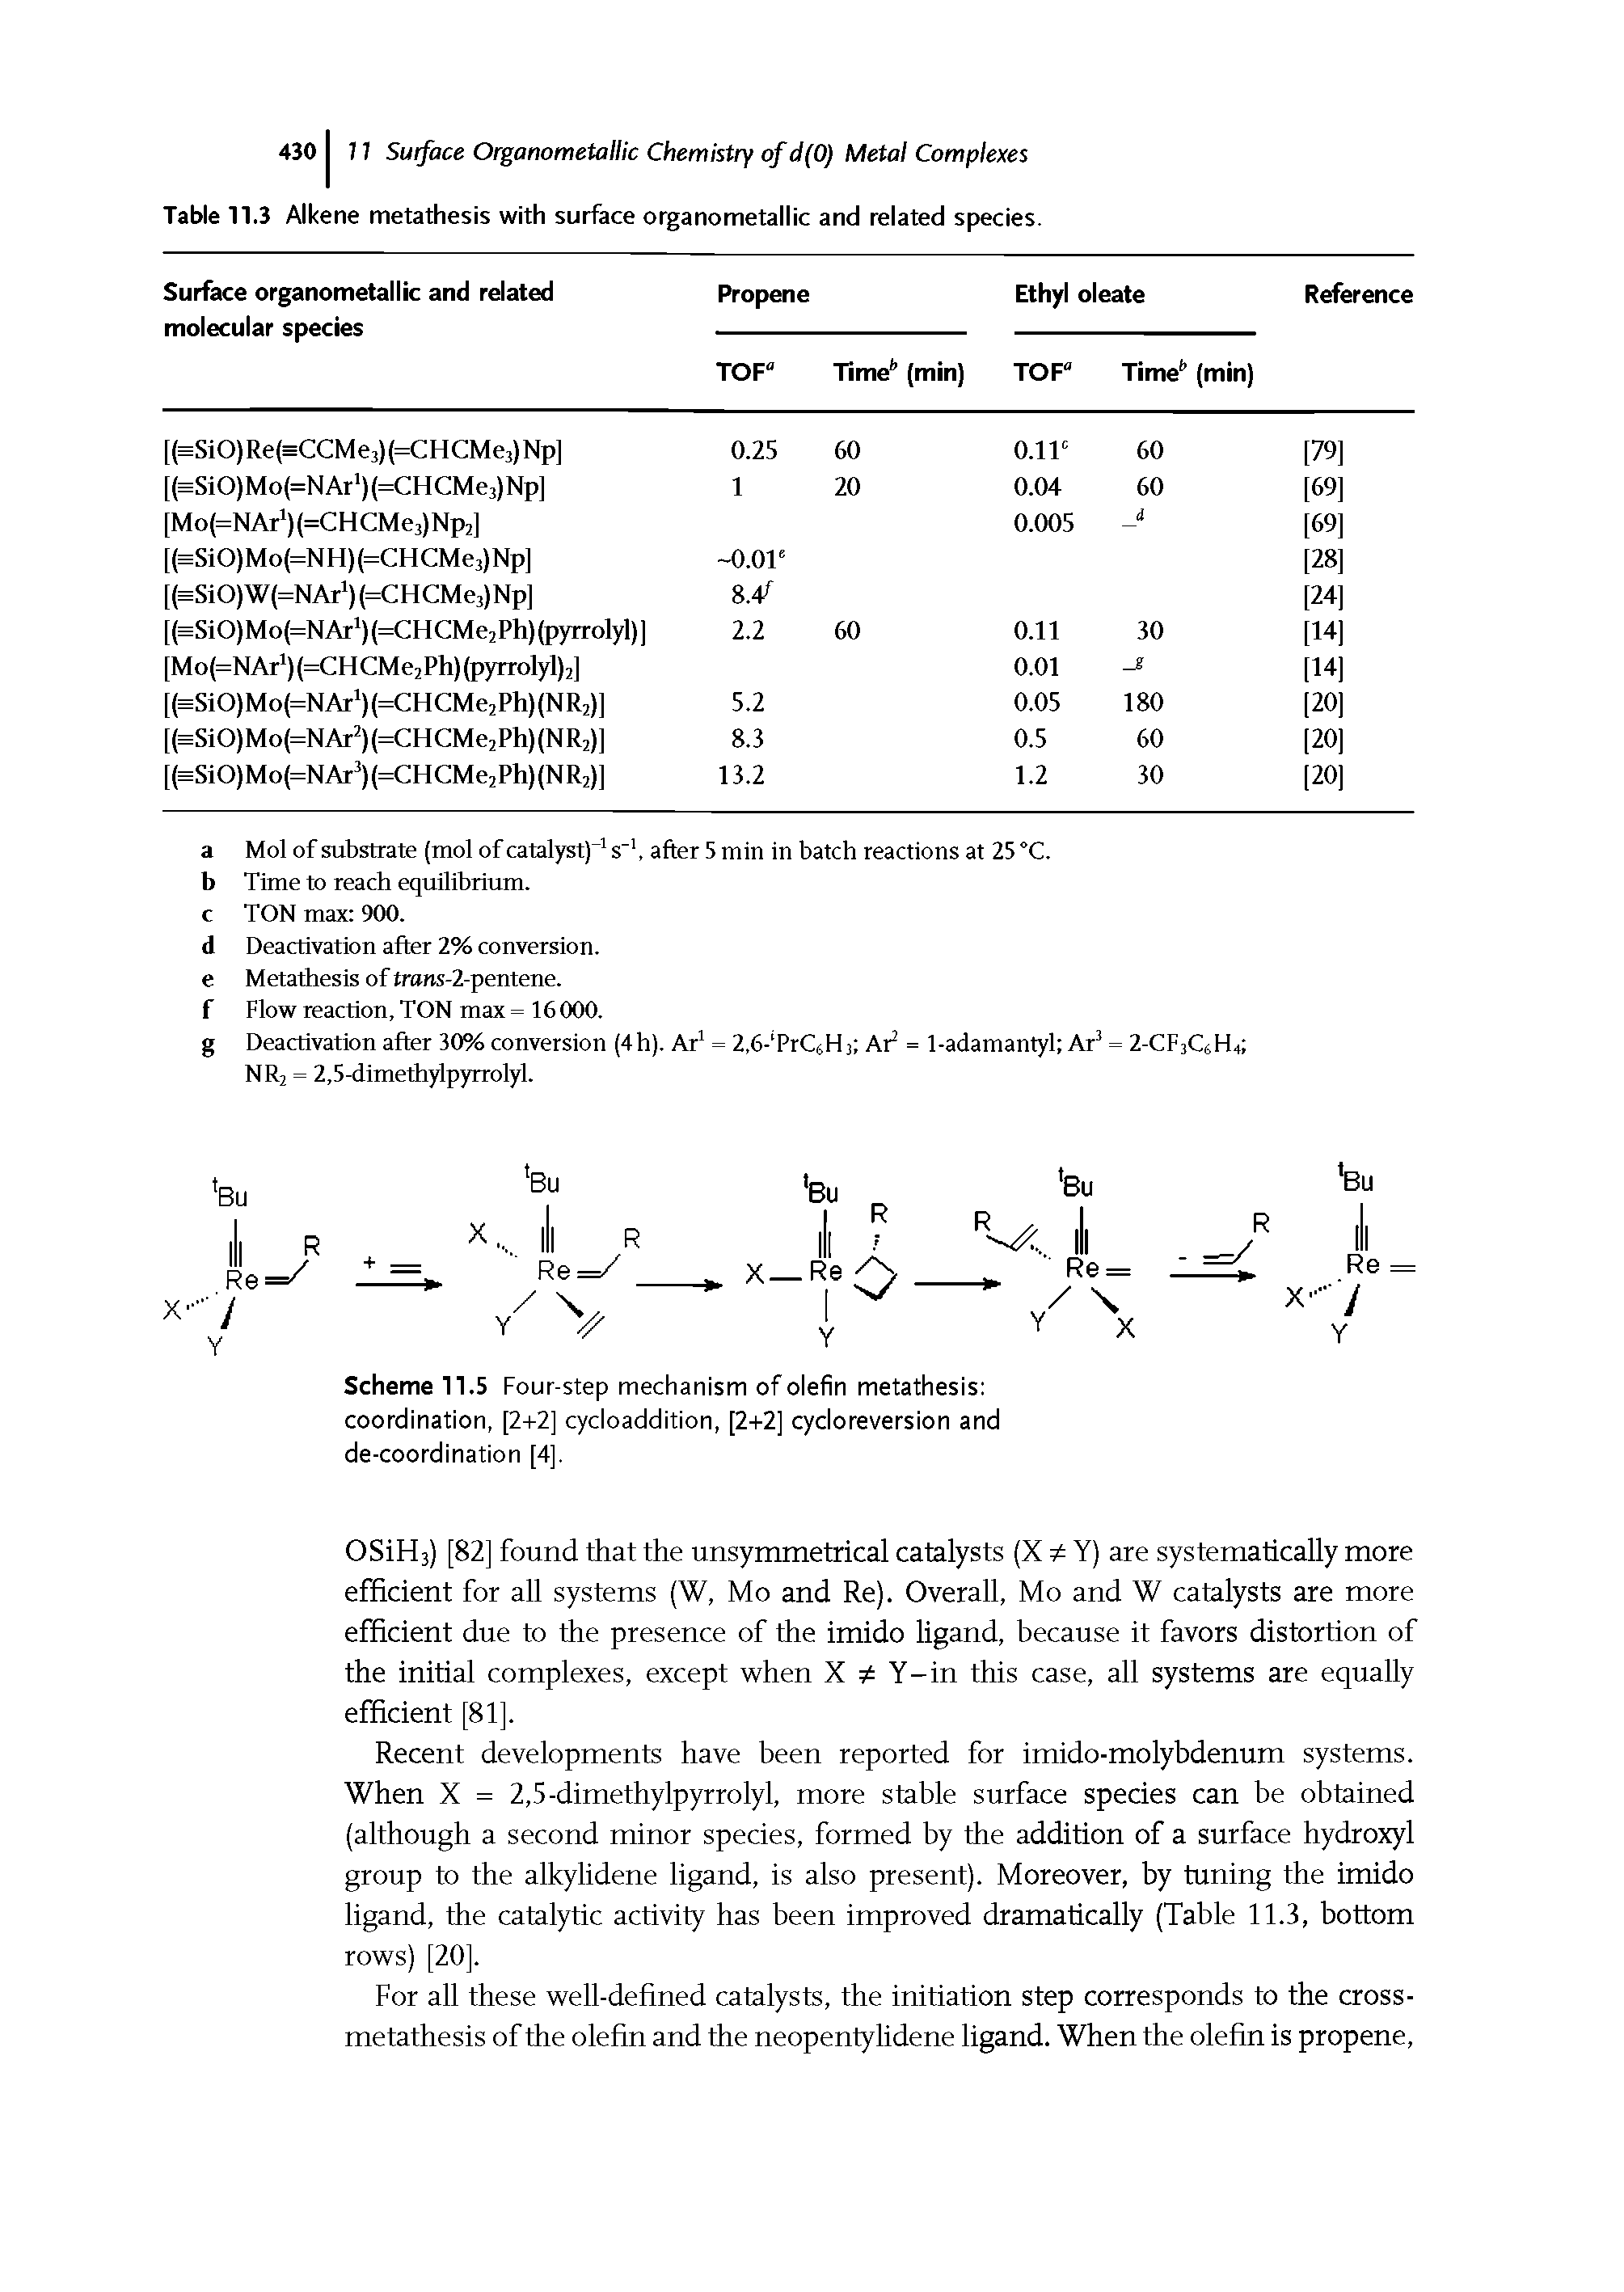 Scheme 11.5 Four-step mechanism of olefin metathesis coordination, [2t-2] cycloaddition, [2+2] cycloreversion and de-coordination [4].